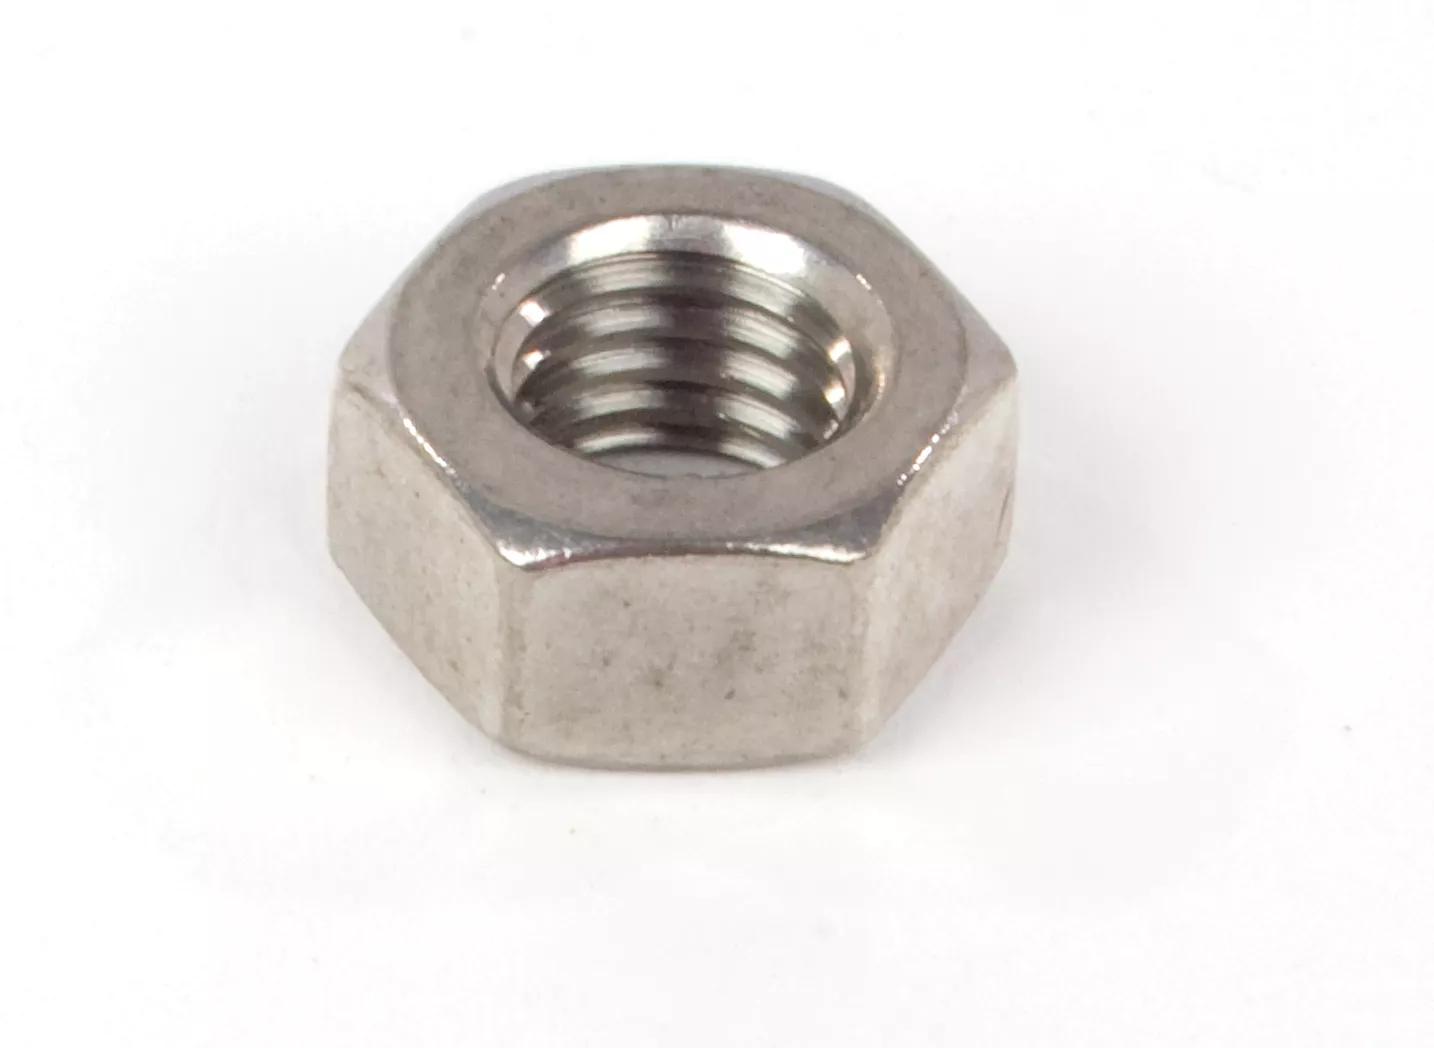 M12 x 1.75 18-8 Stainless Steel (Coarse Thread) Hex Nut